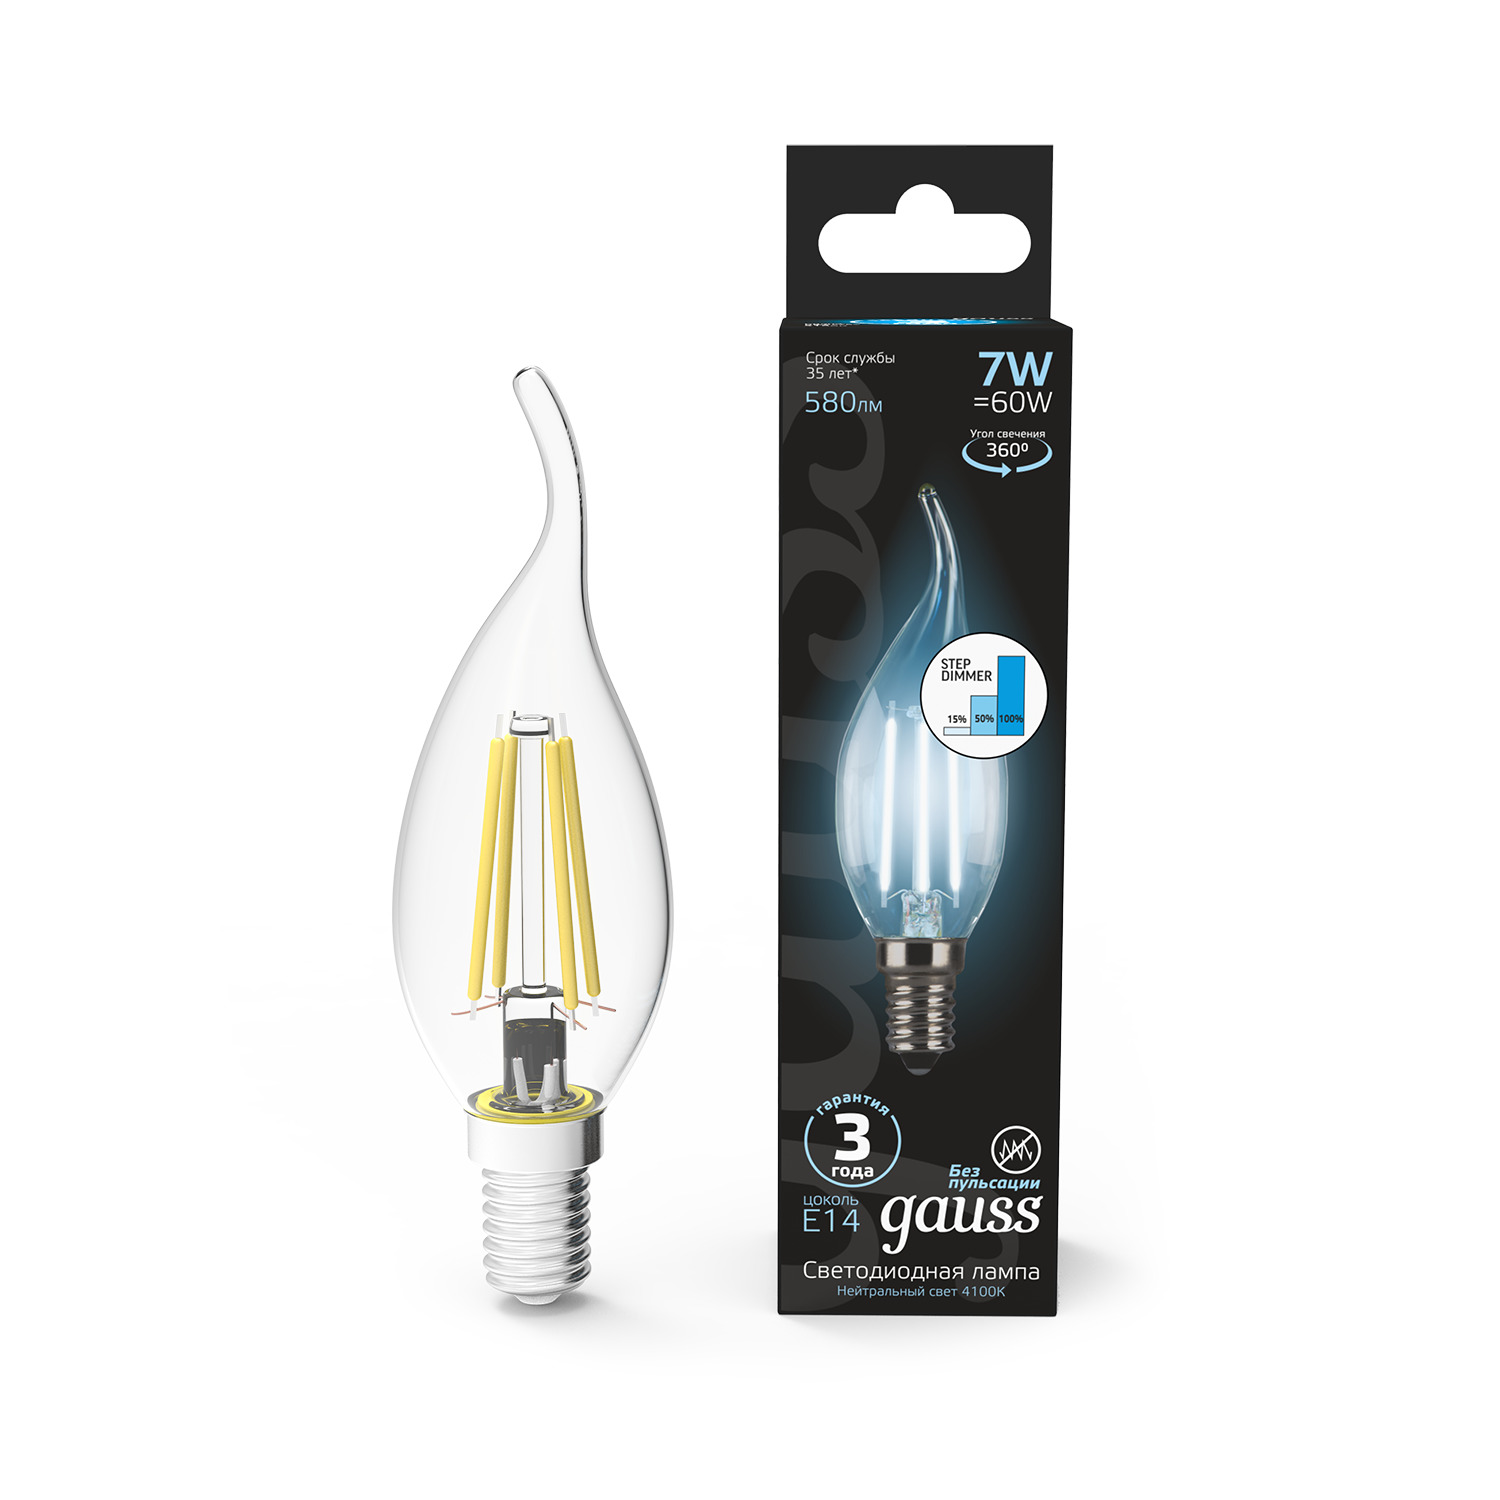 Лампа Gauss LED Filament Свеча на ветру E14 7W 580lm 4100K step dimmable 1/10/50 лампа gauss led filament свеча на ветру e14 7w 580lm 4100k step dimmable 1 10 50